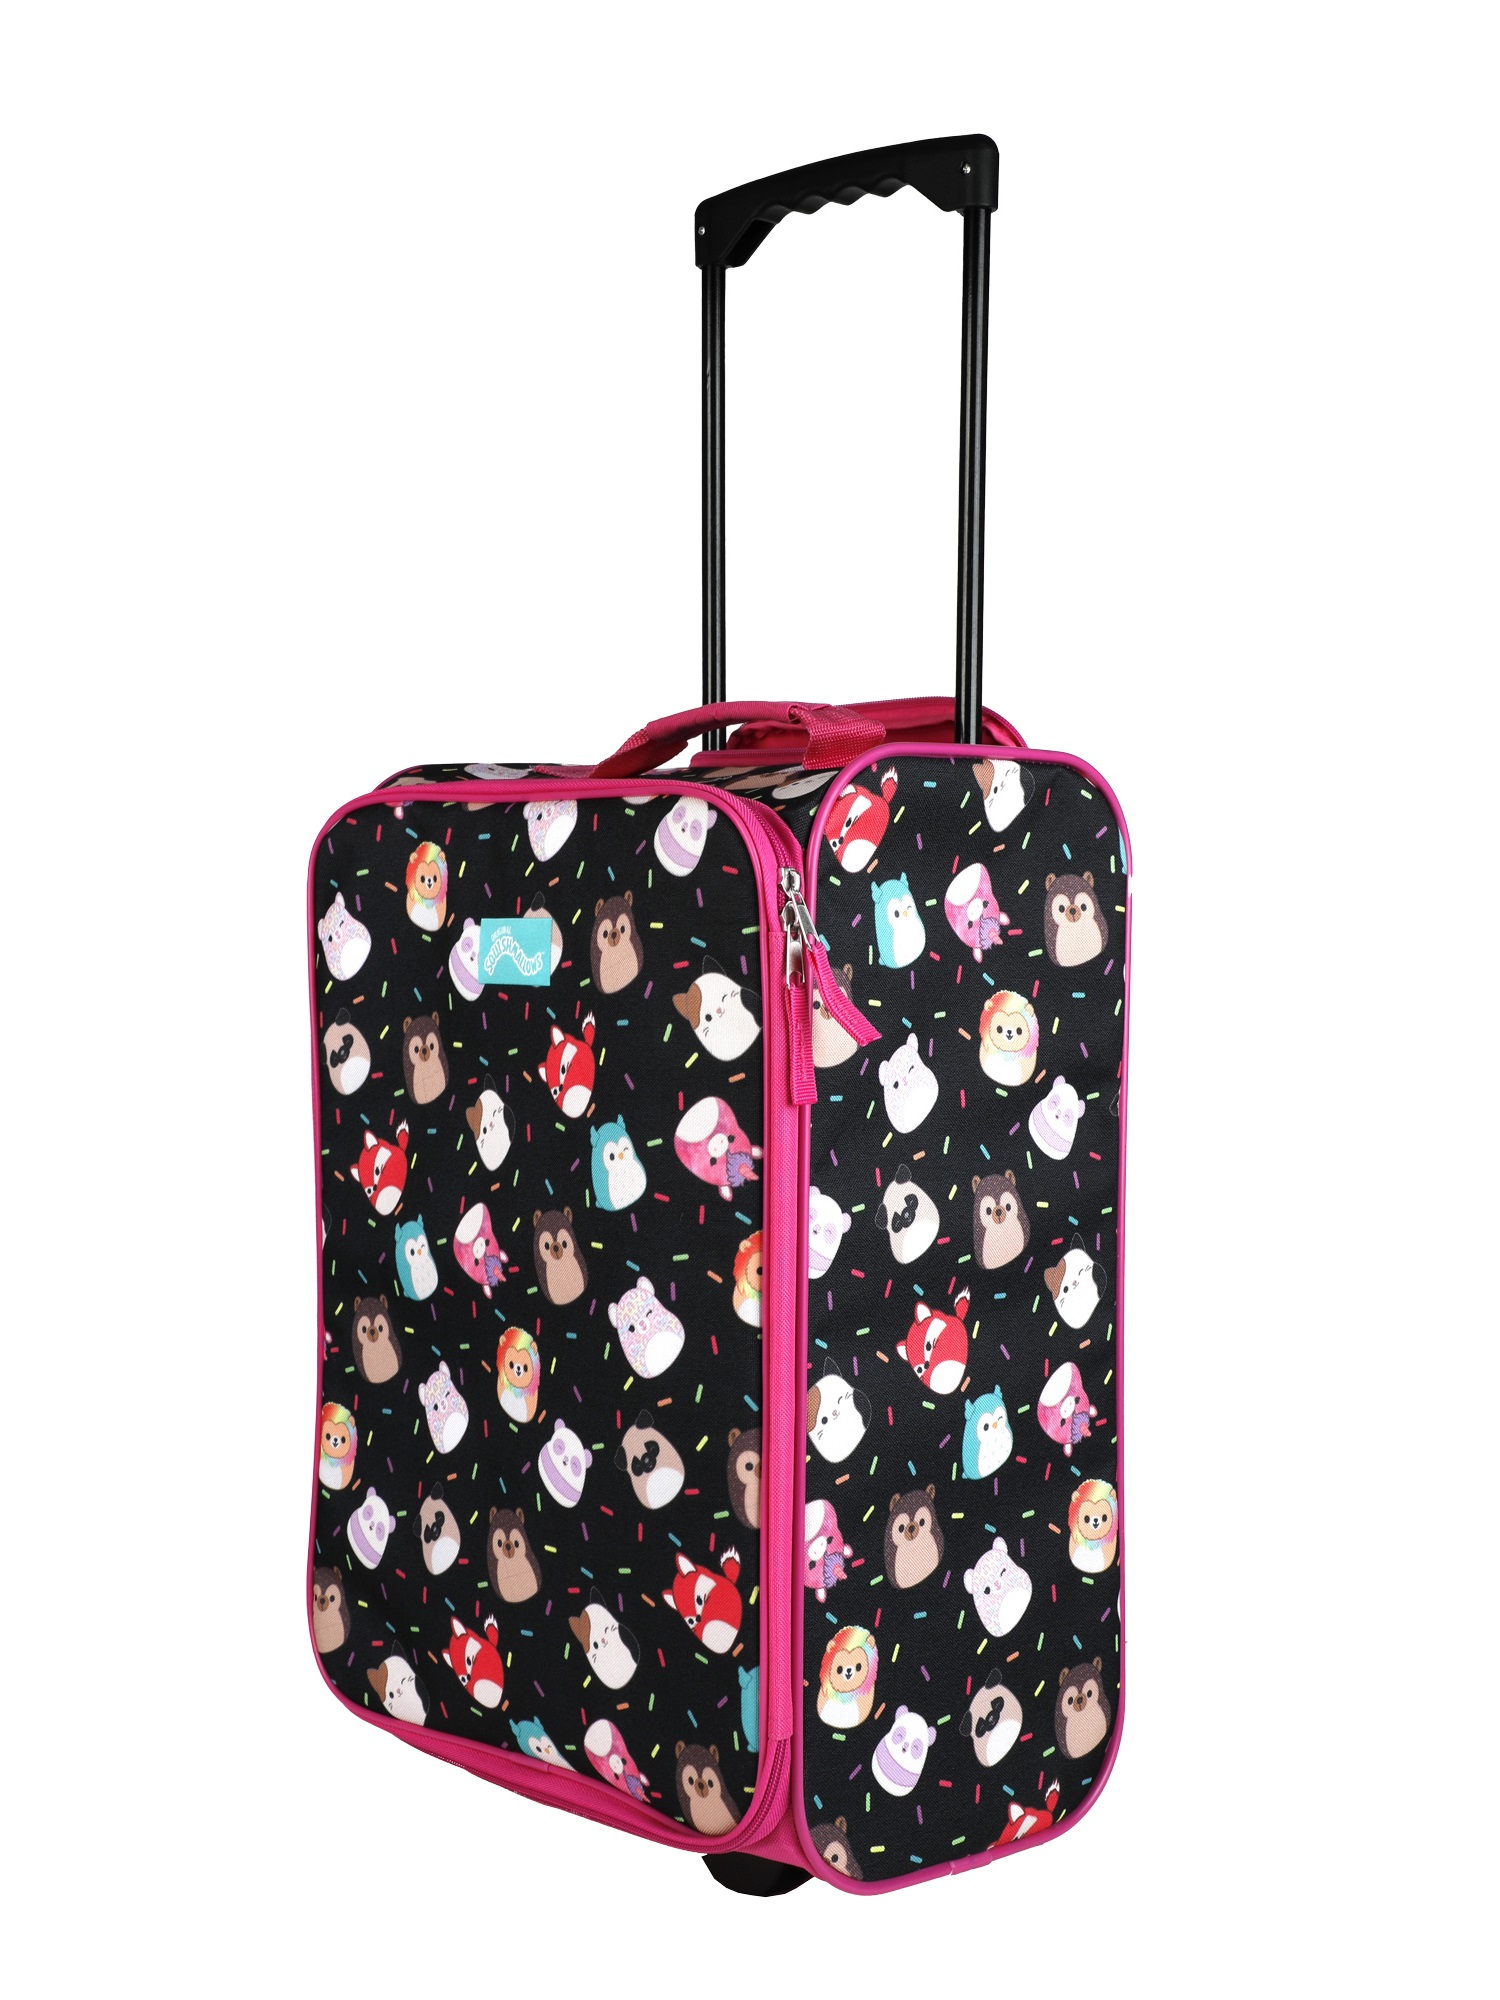 Squishmallows Lola Unicorn 2pc  Travel Set with 18" Luggage and 10" Plush Backpack - image 5 of 9